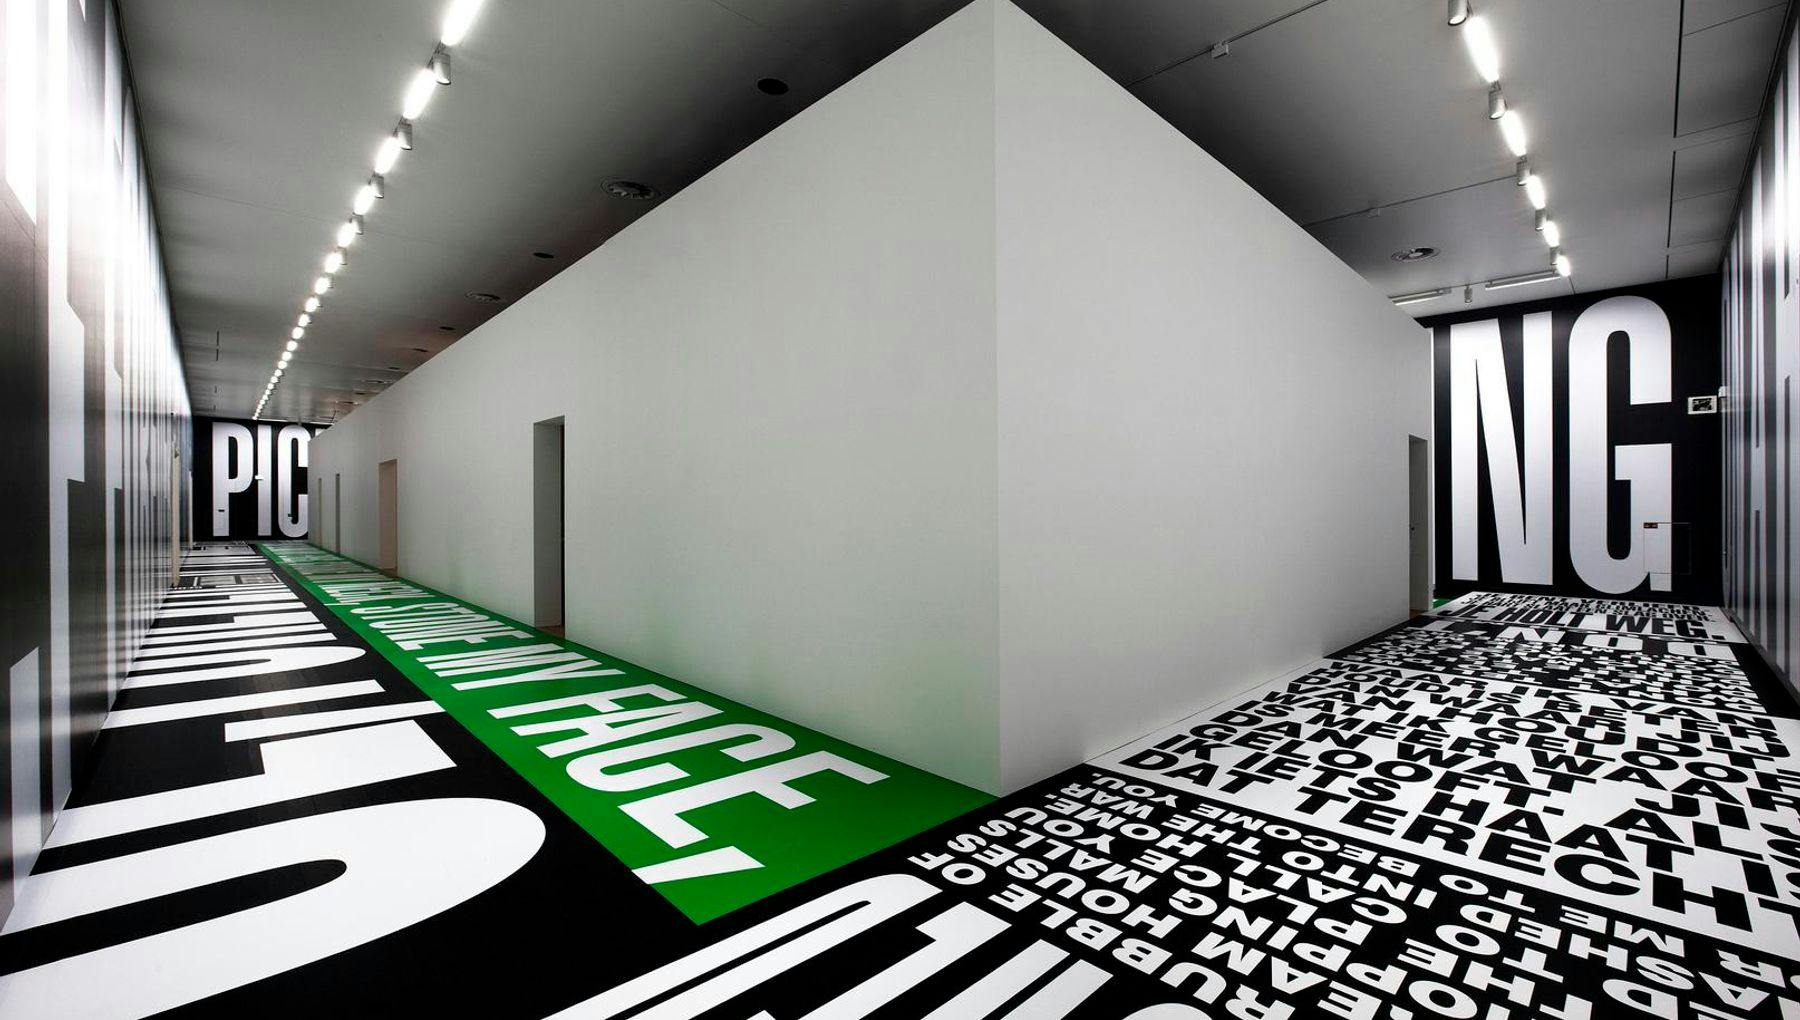 Stedelijk Museum contemporary art collection